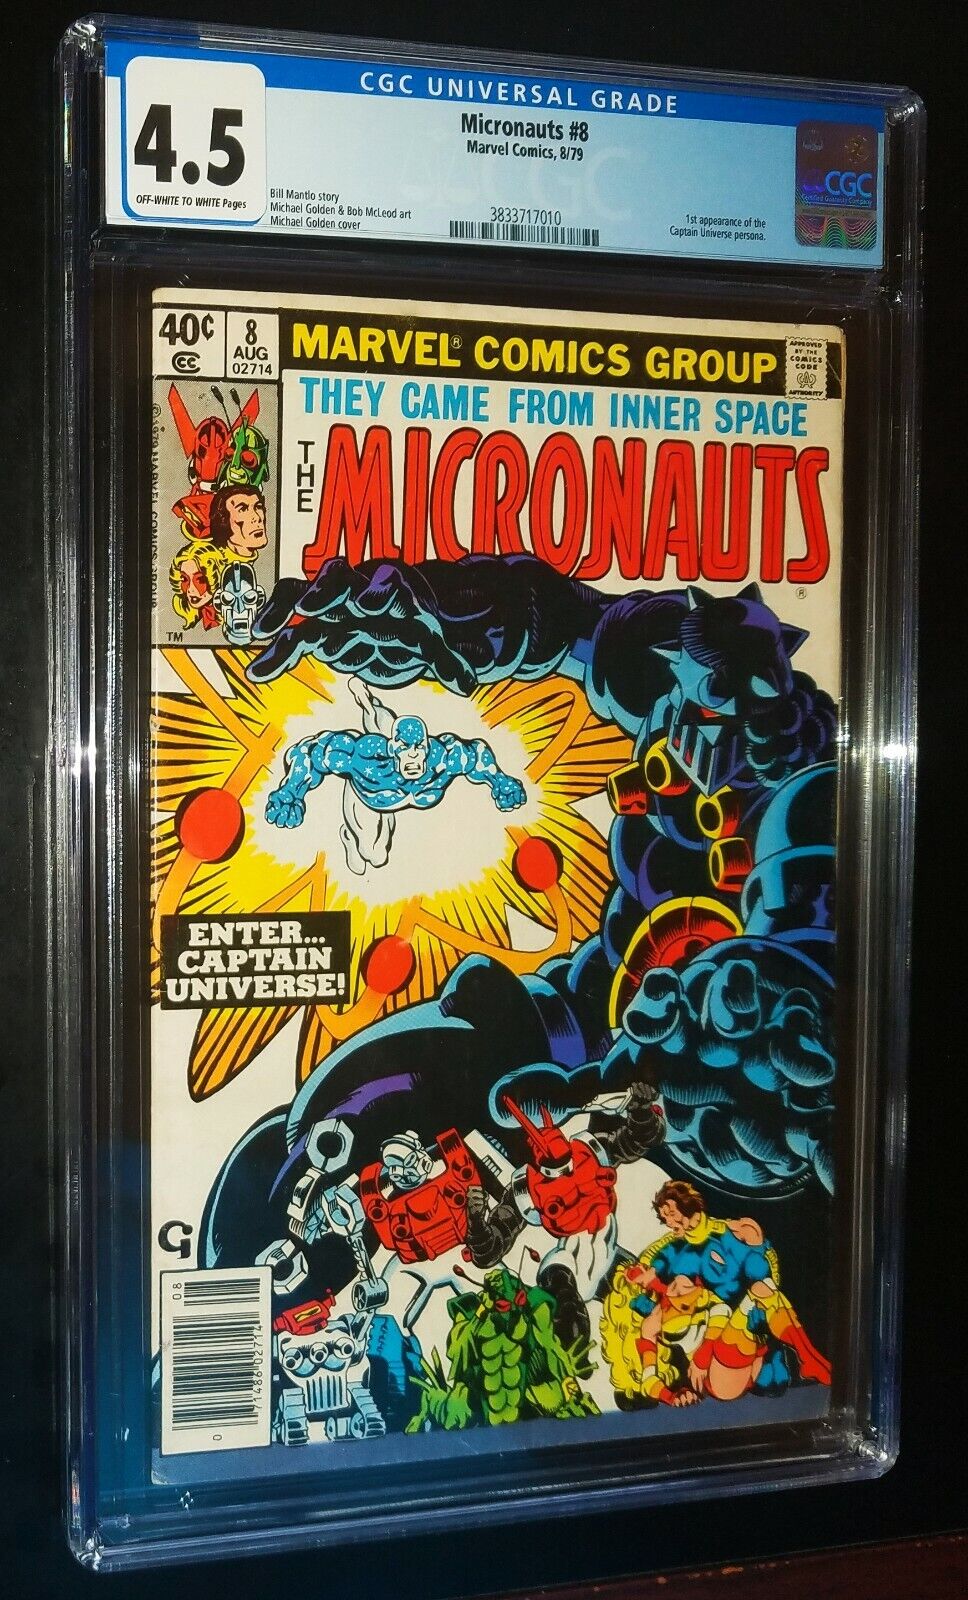 THE MICRONAUTS CGC #8 1979 Marvel Comics CGC 4.5 VG+ 0626